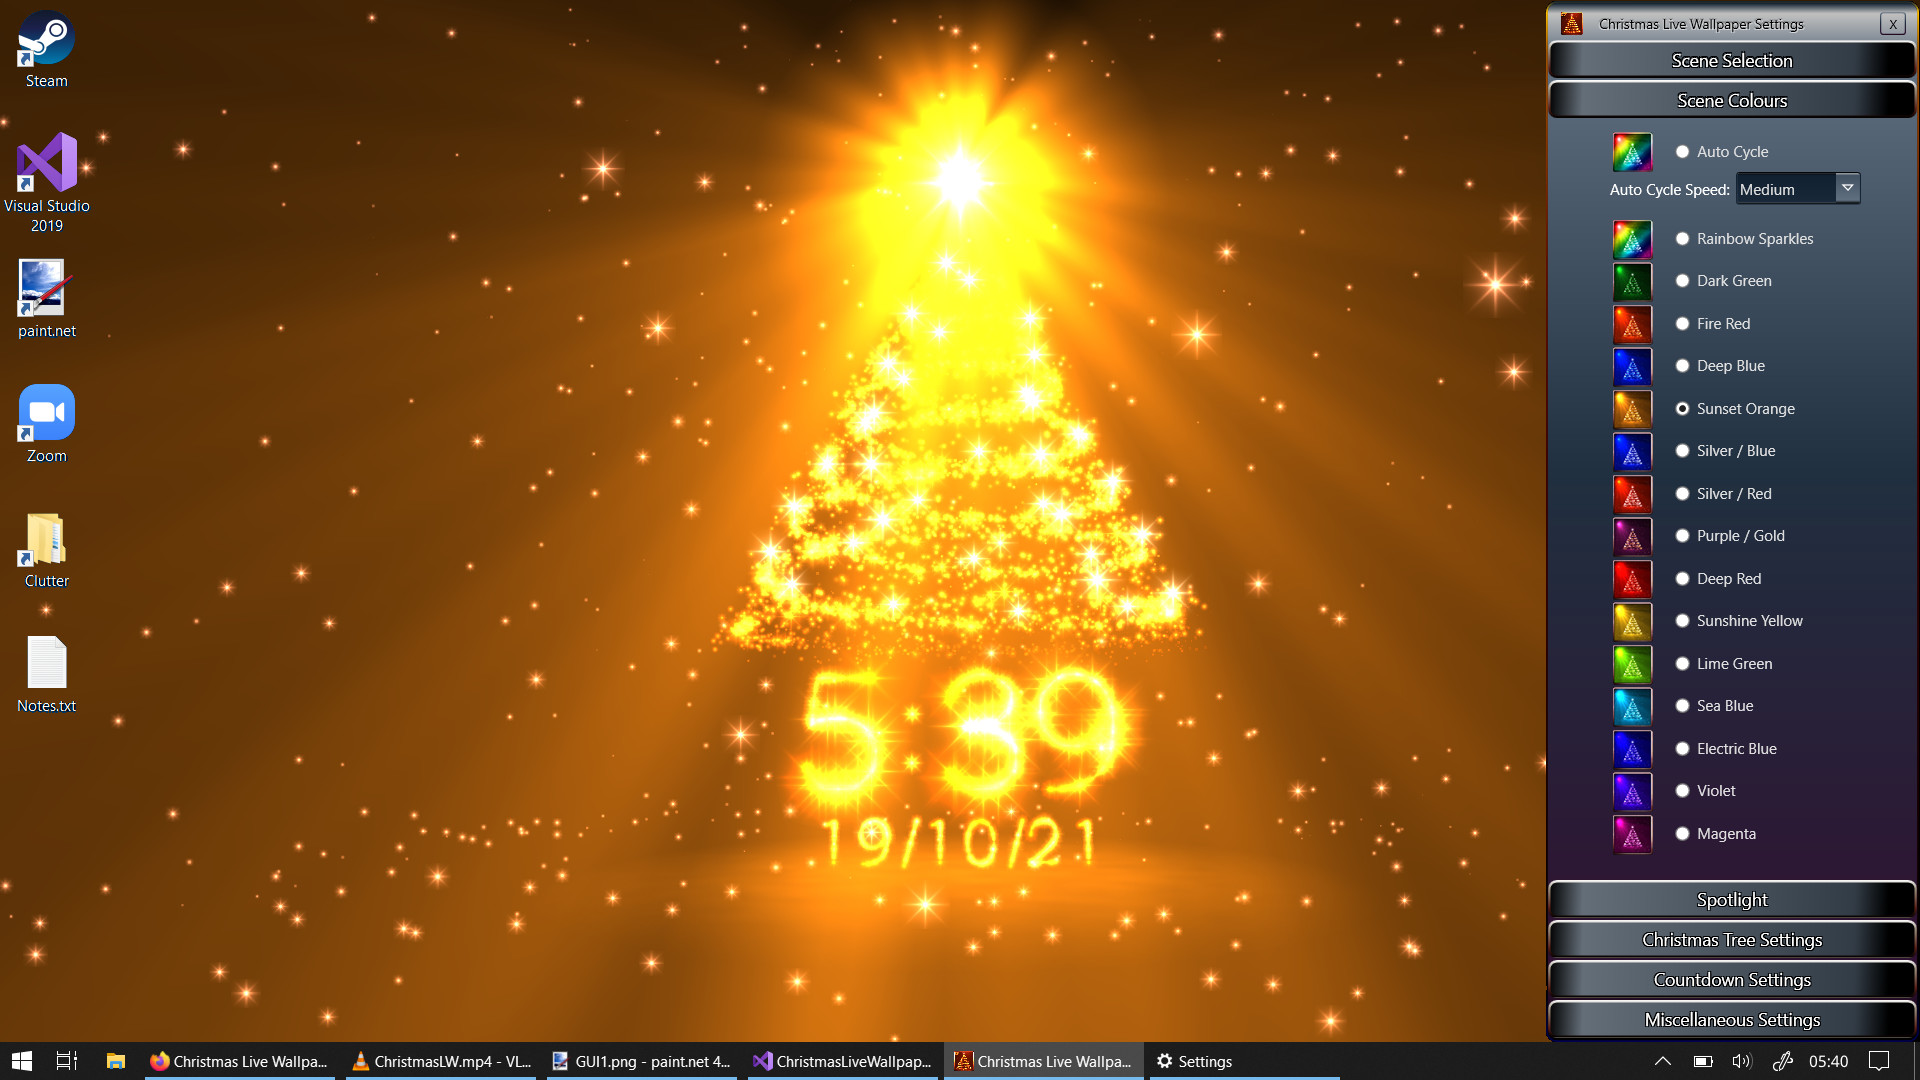 Christmas Live Wallpaper on Steam